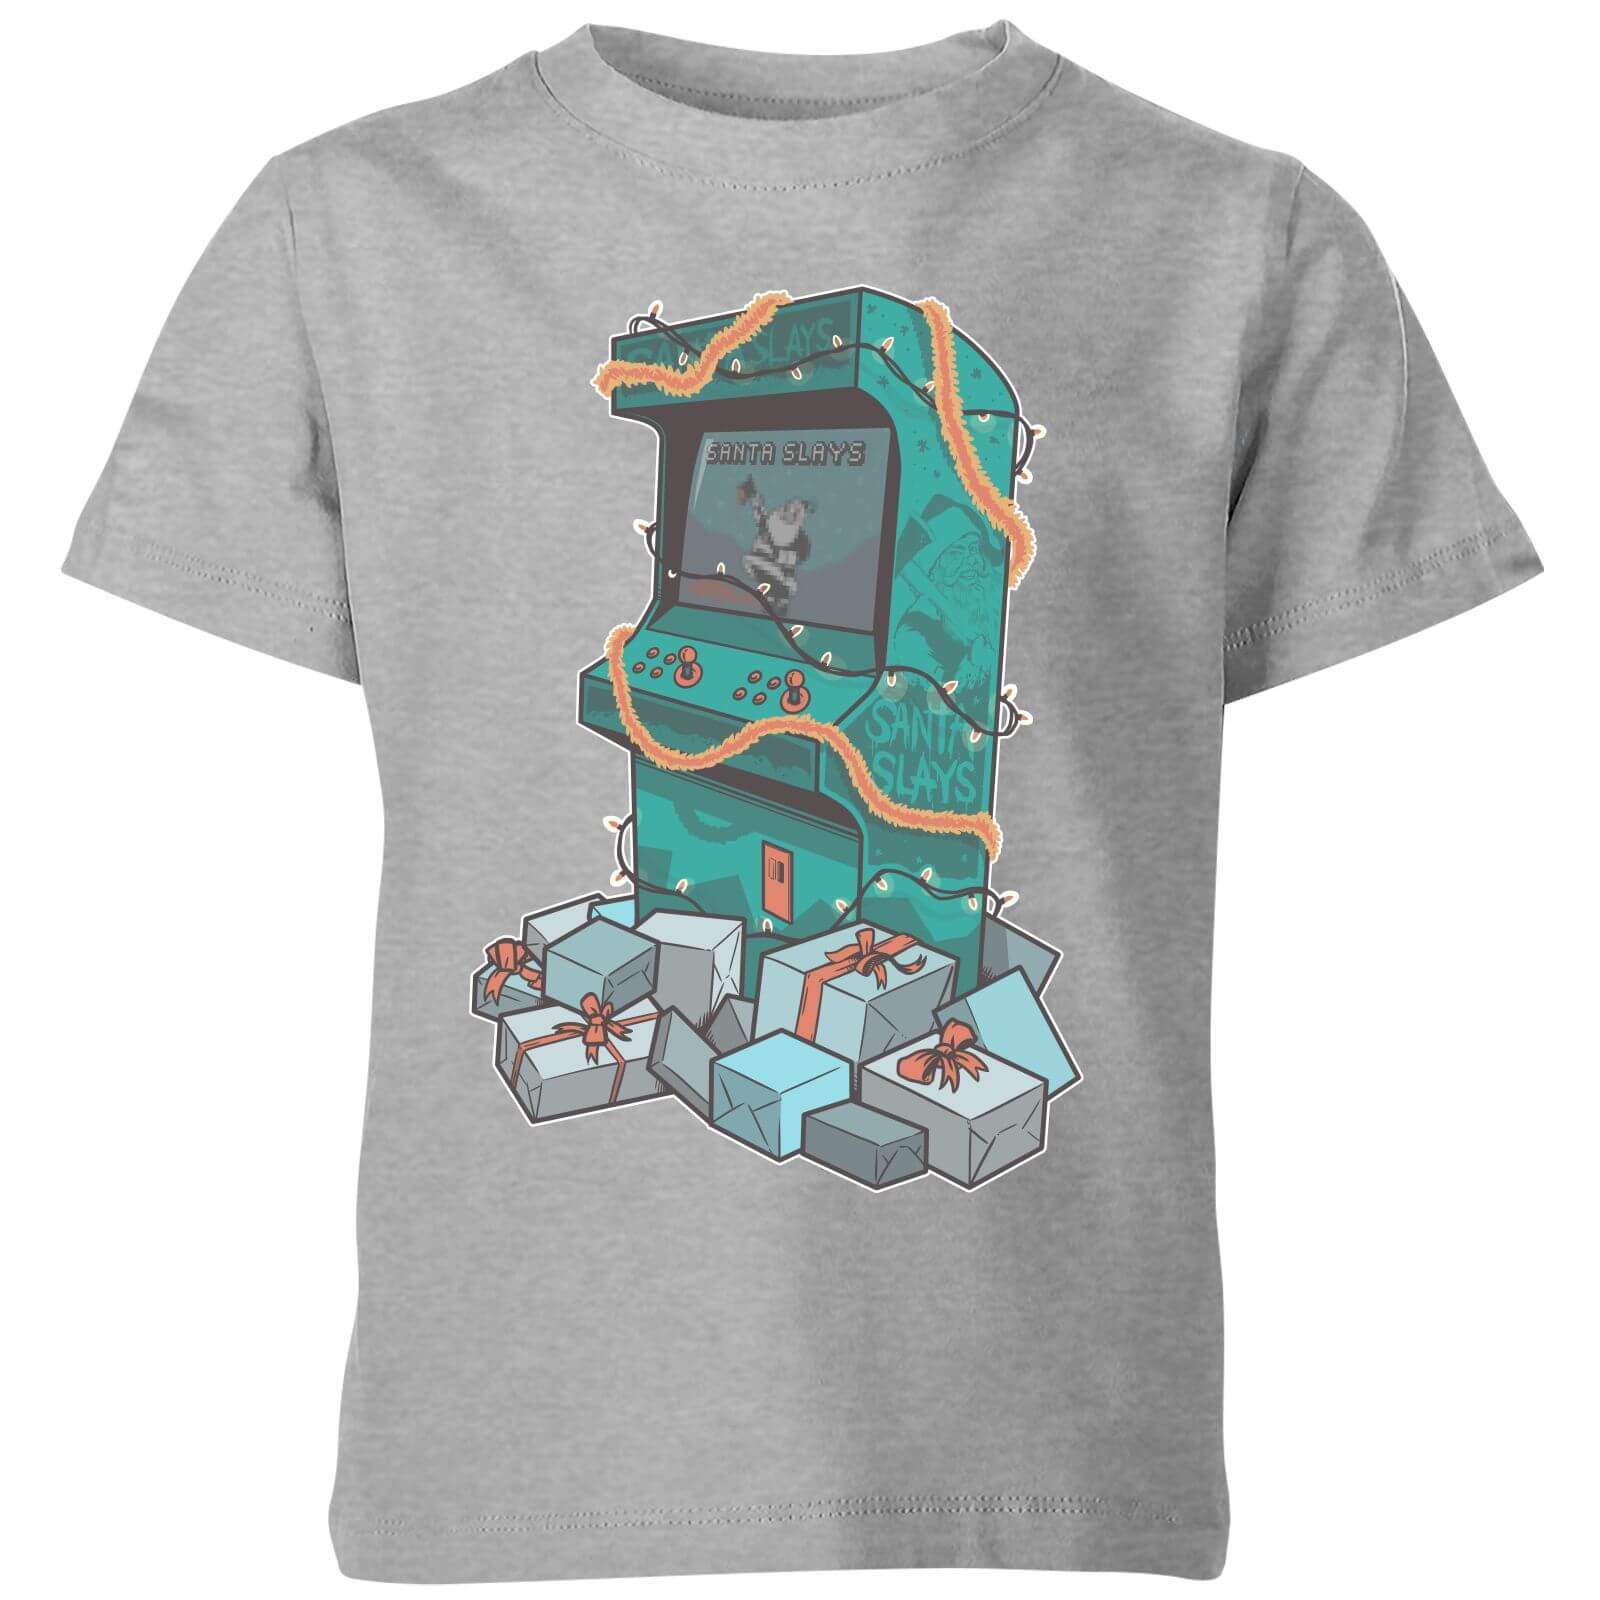 Arcade Tress Kids' T-Shirt - Grey - 5-6 Years - Grey